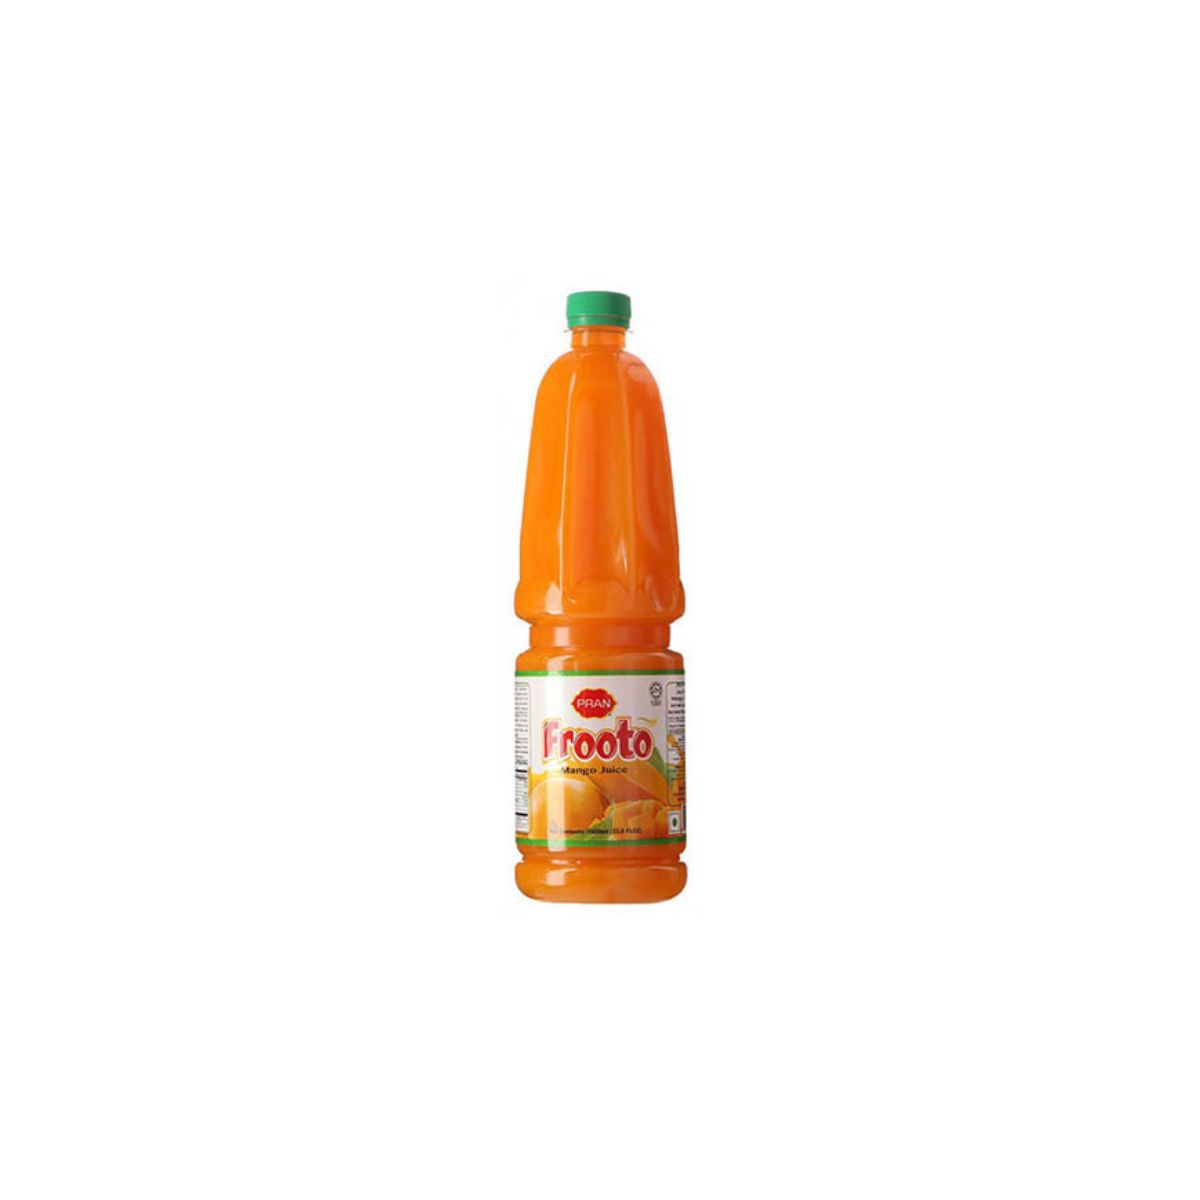 Pran Frooto Mango Drink - 1L